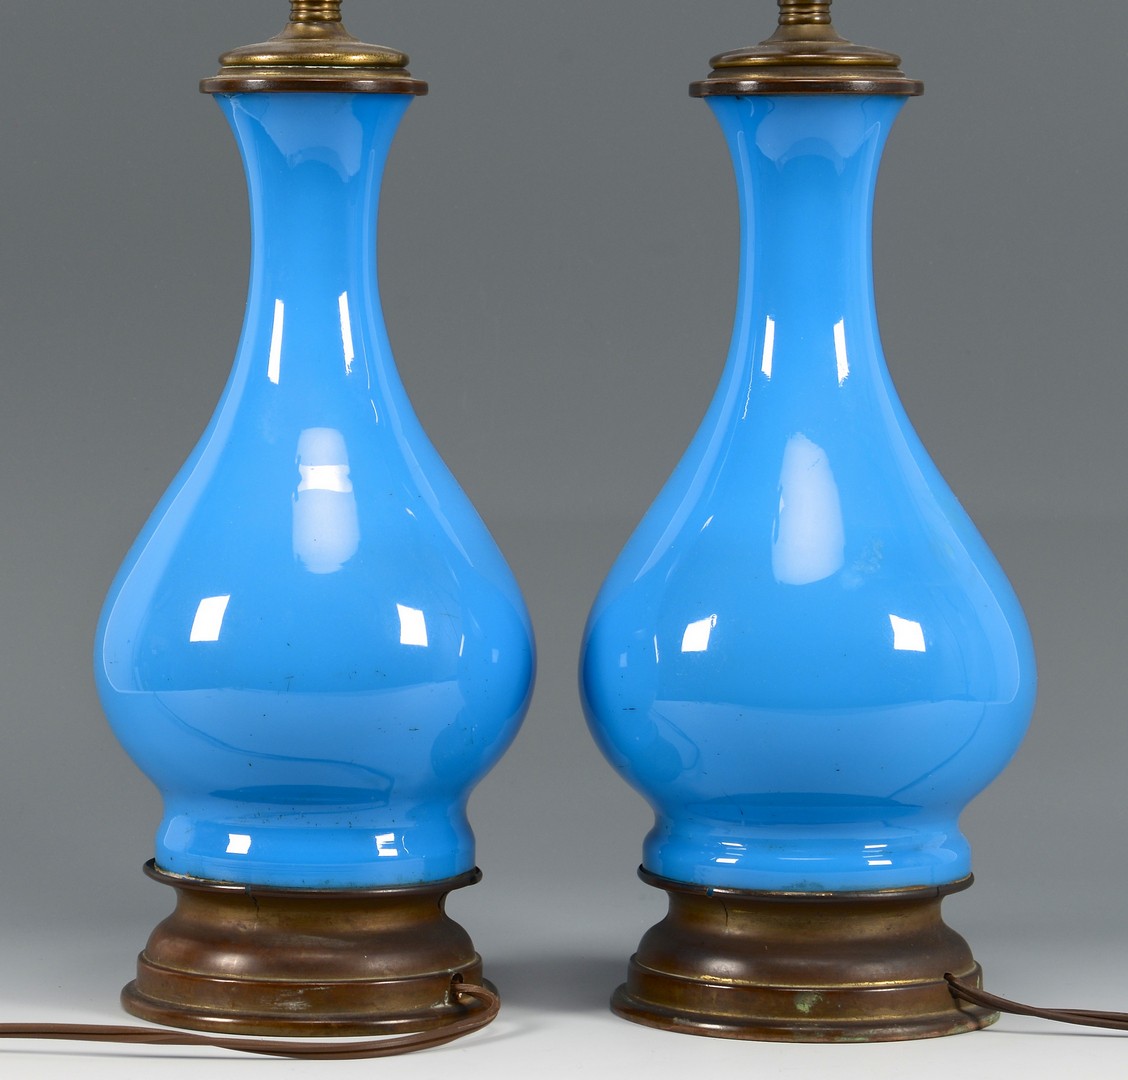 Lot 414: 2 Pair of Lamps, Prunus & Turquoise